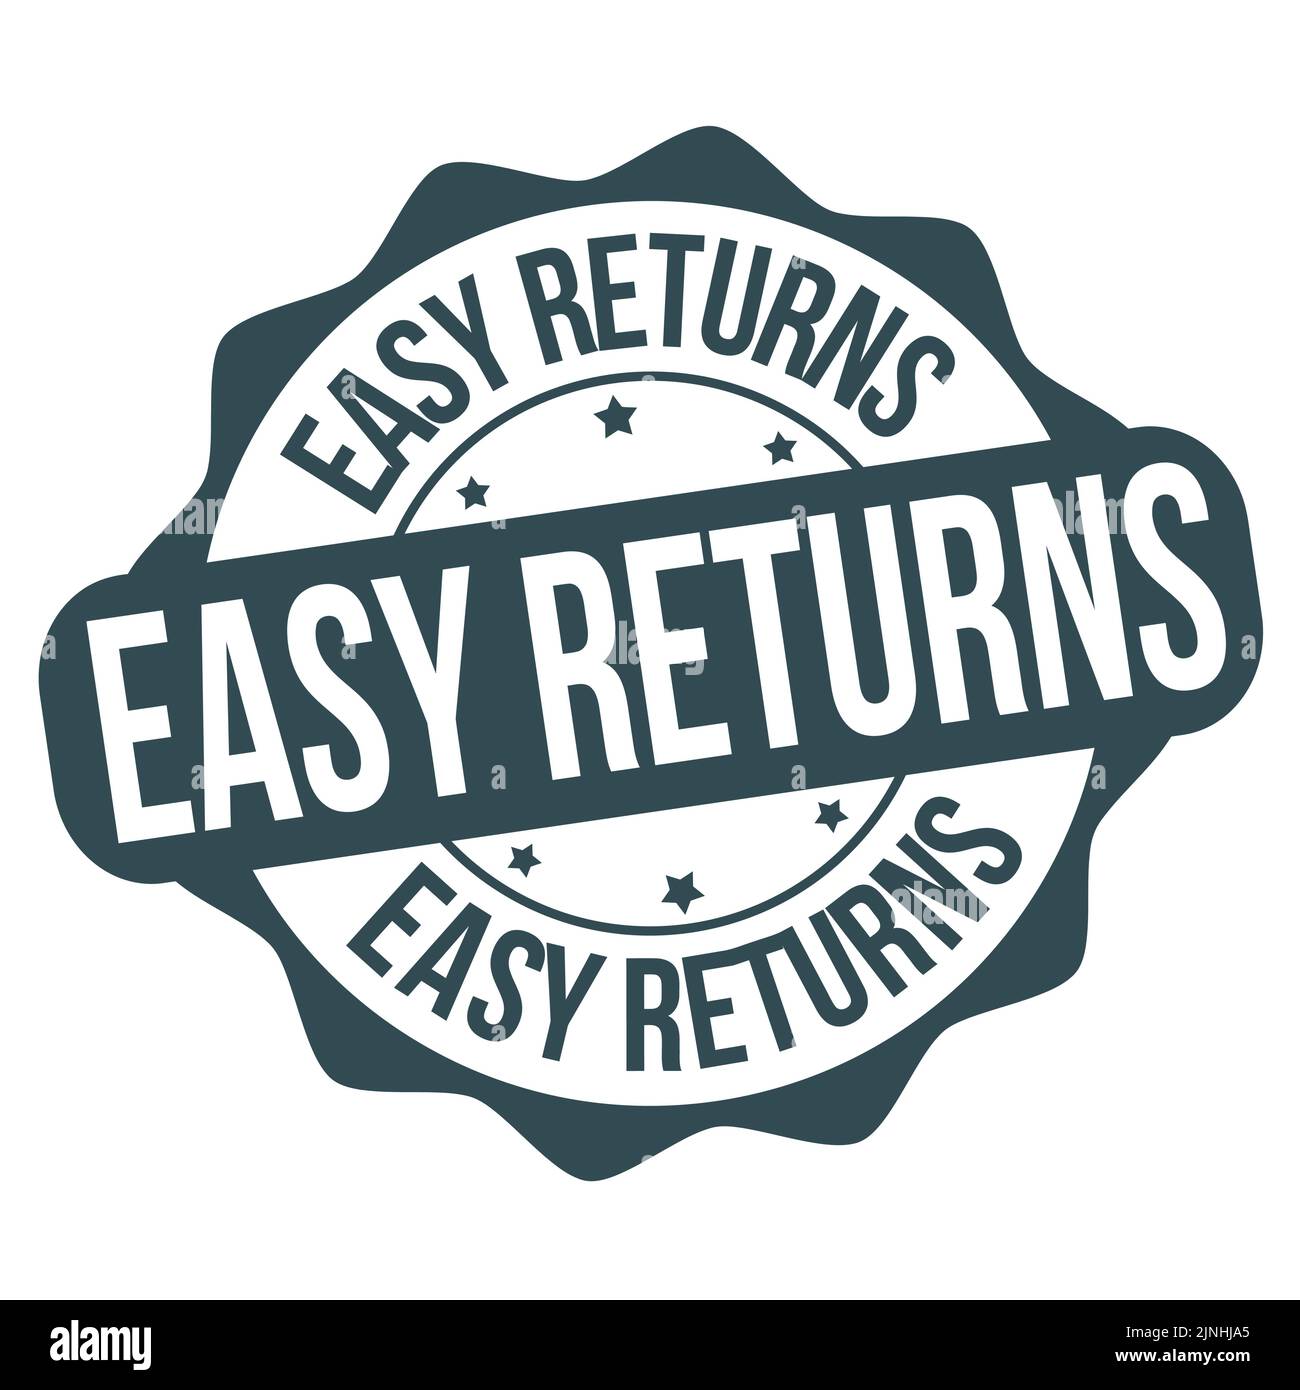 Easy returns label or stamp on white background, vector illustration Stock Vector